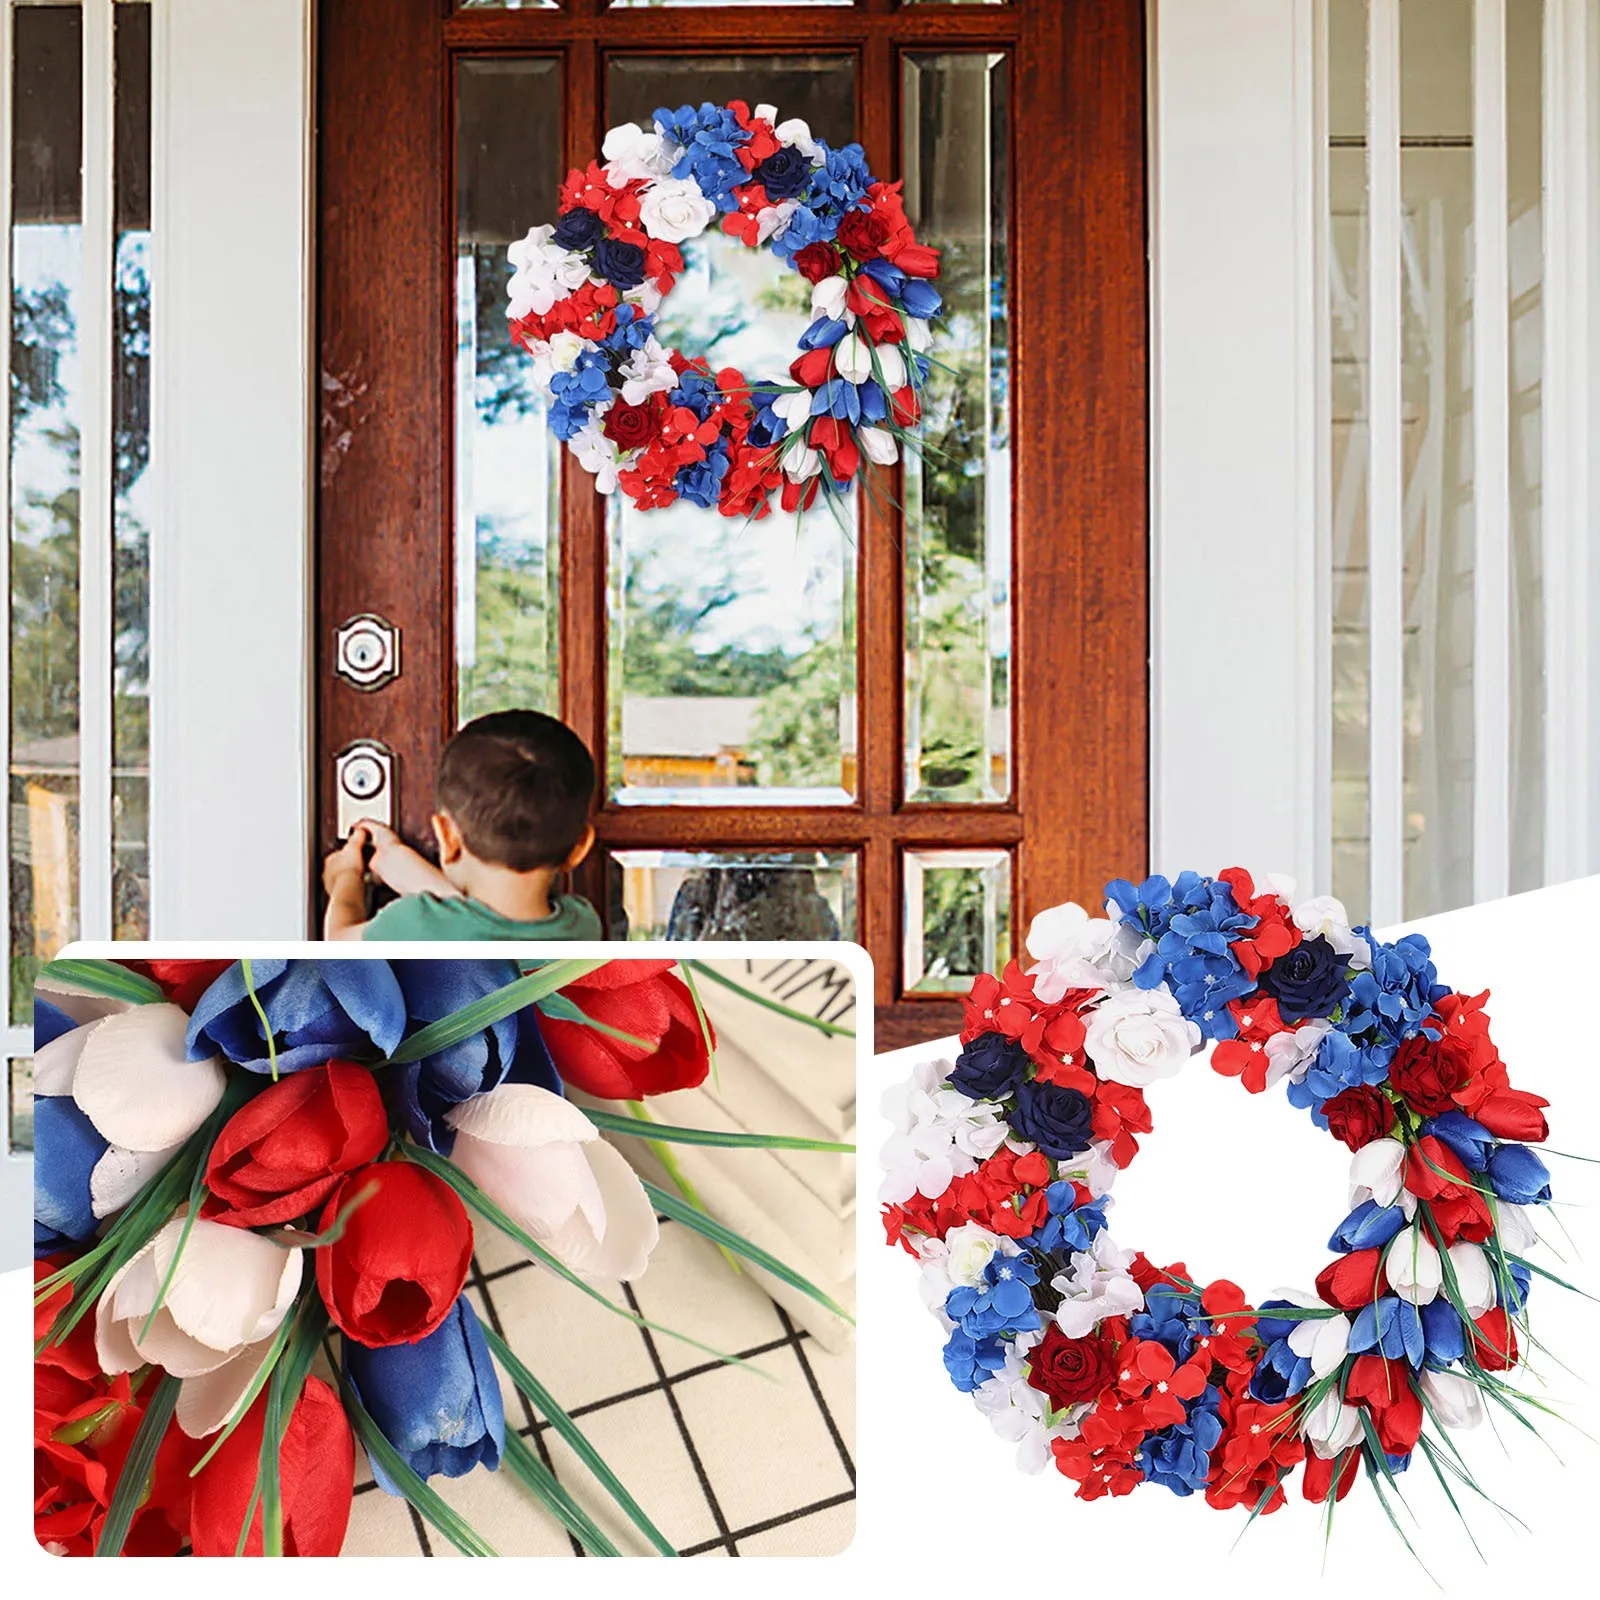 

Decoration Hanging Day Front Independence Outdoor Decor Wreath Door Porch Wreath Wreath Heart Wreath Outdoor